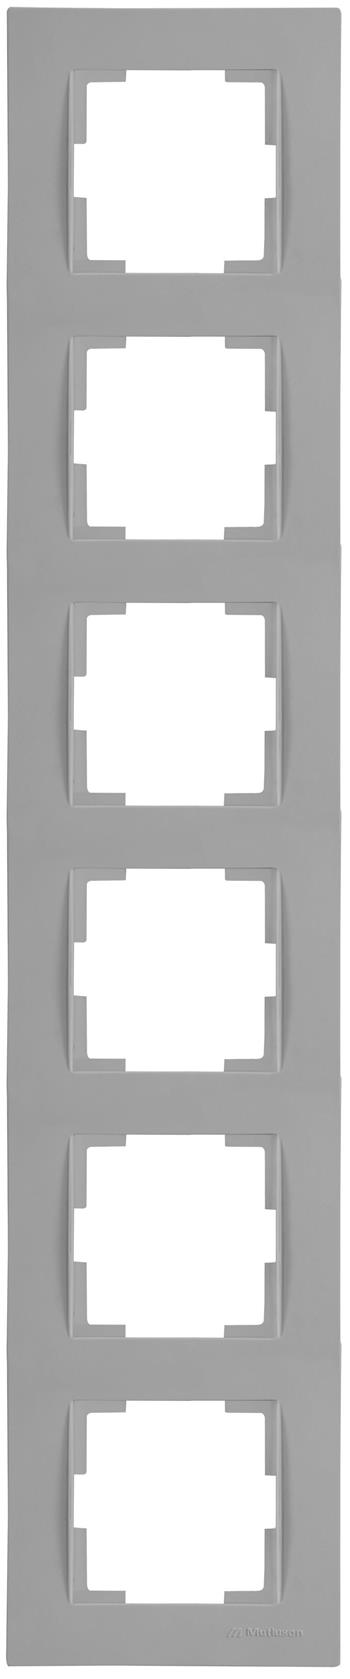 6fach Rahmen vertikal Grau (RITA Pastell Farben)